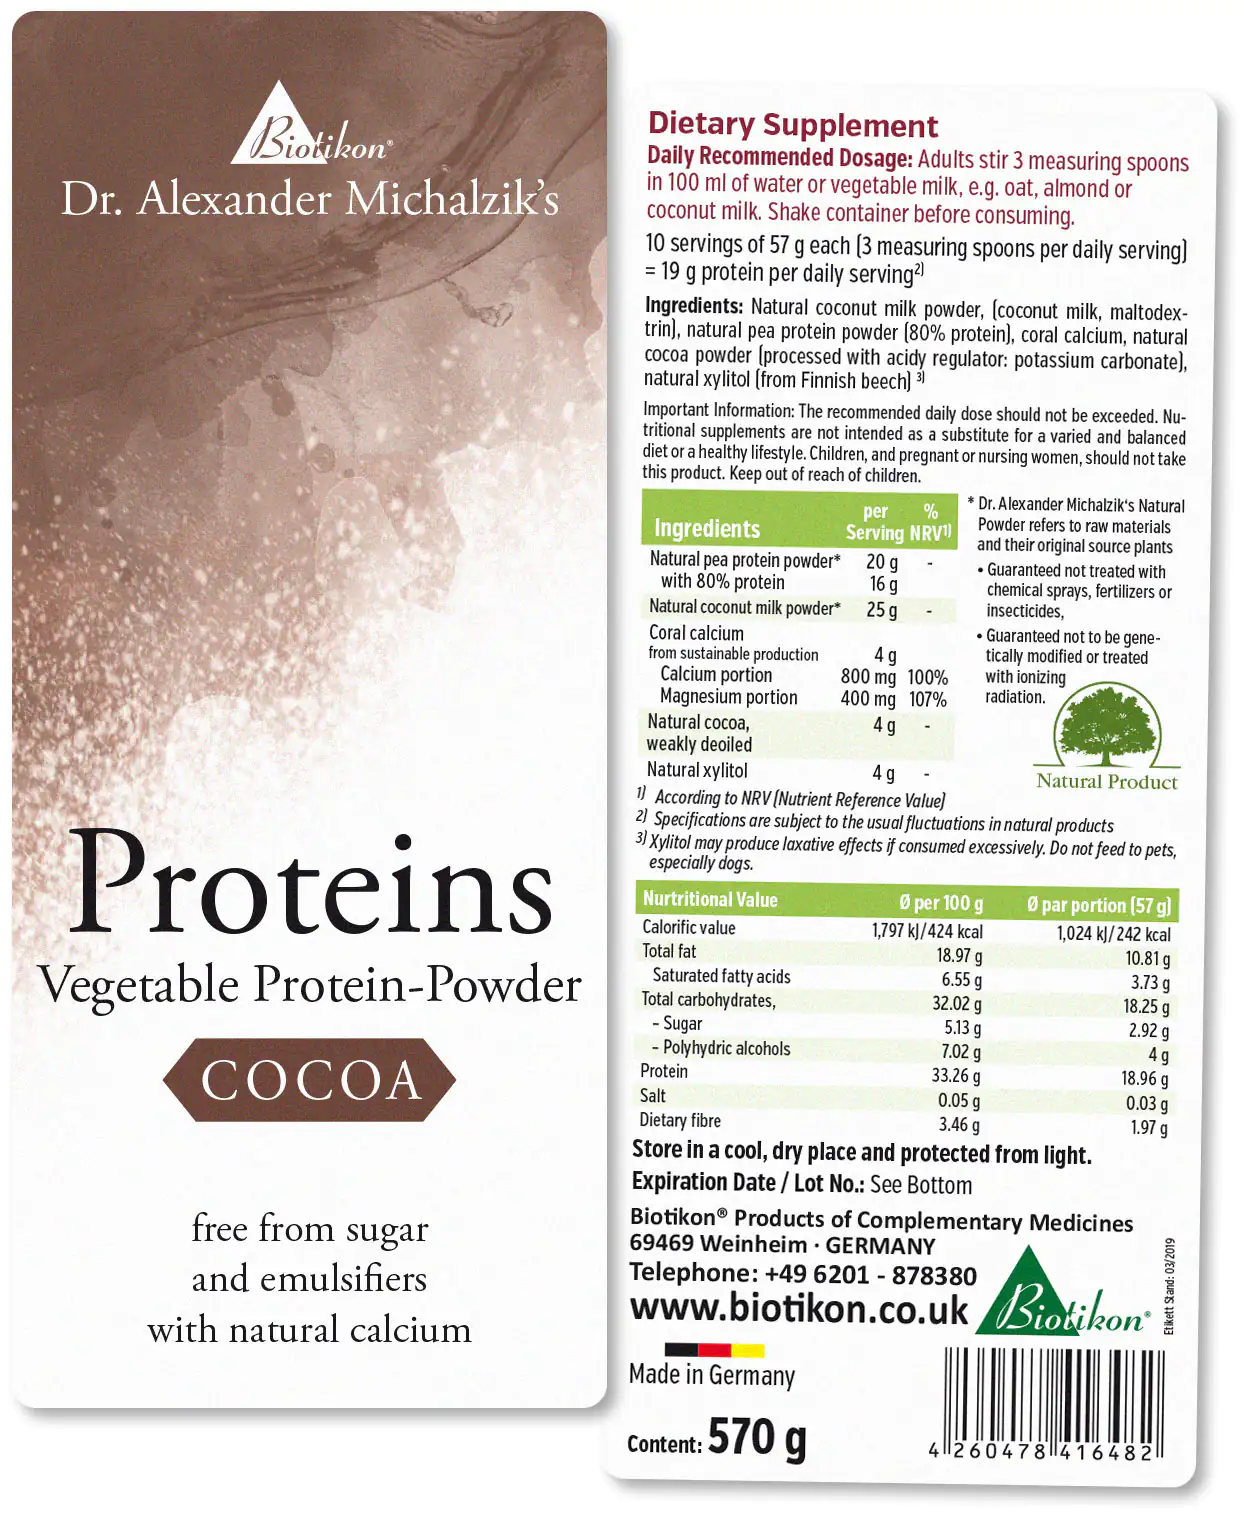 Proteine - 2er-Pack, Kokos